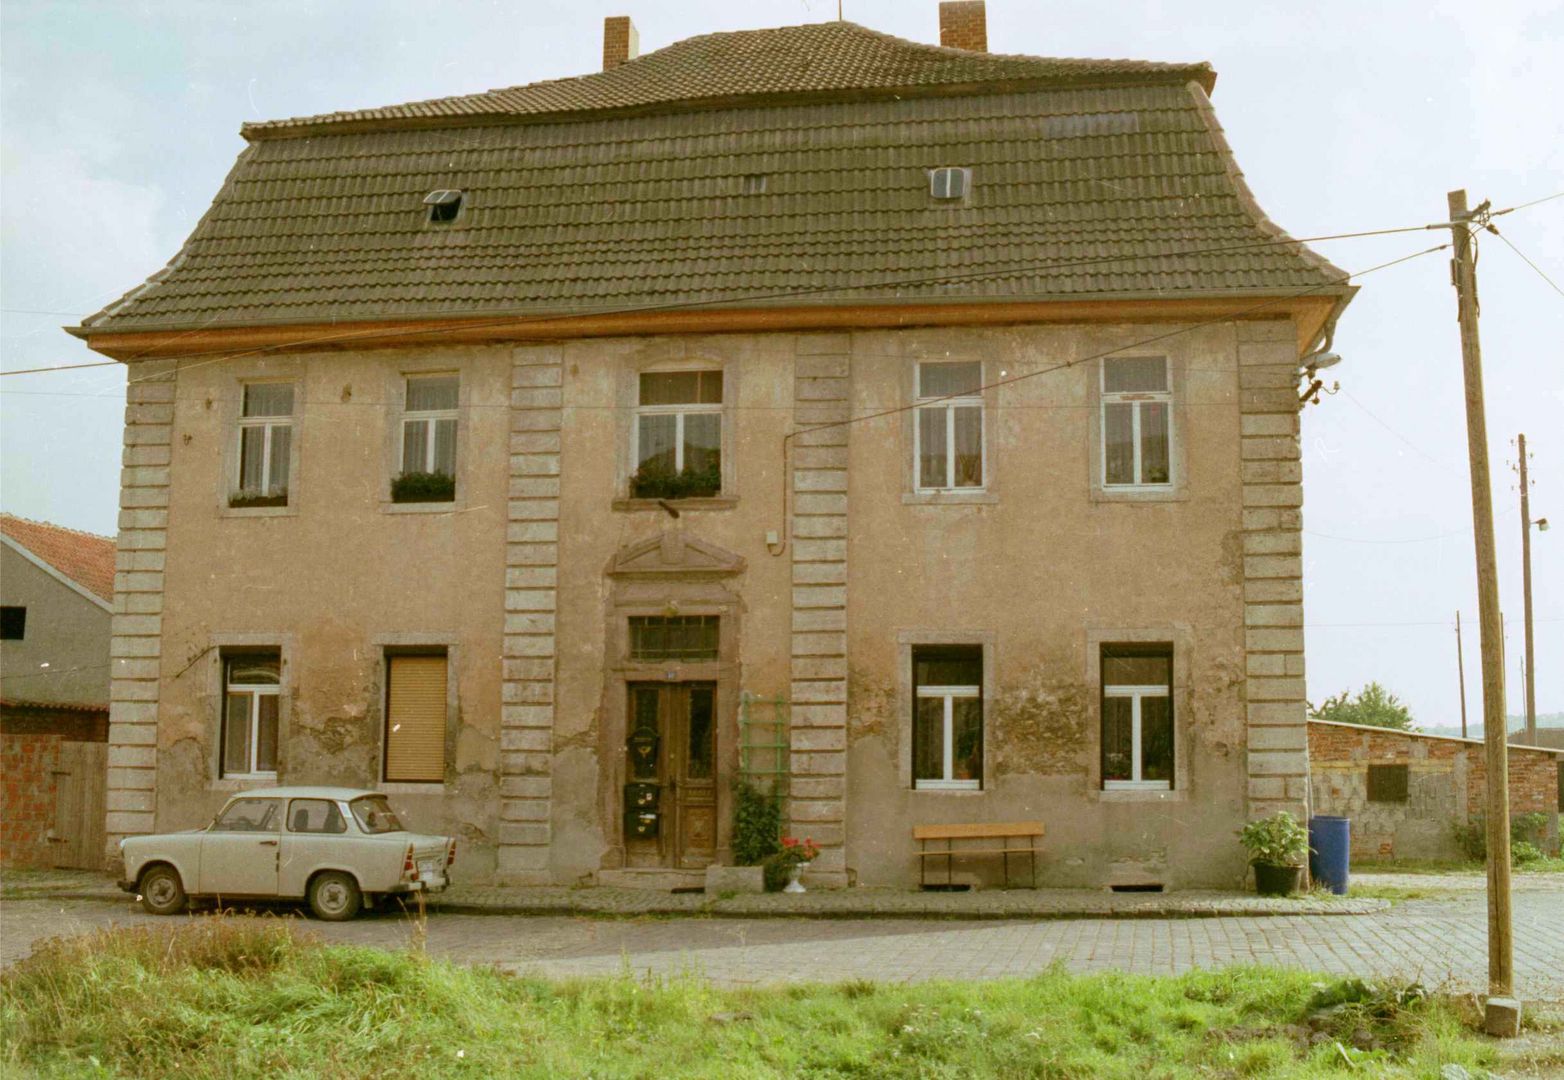 Kannawurf Schreiberhof 1994